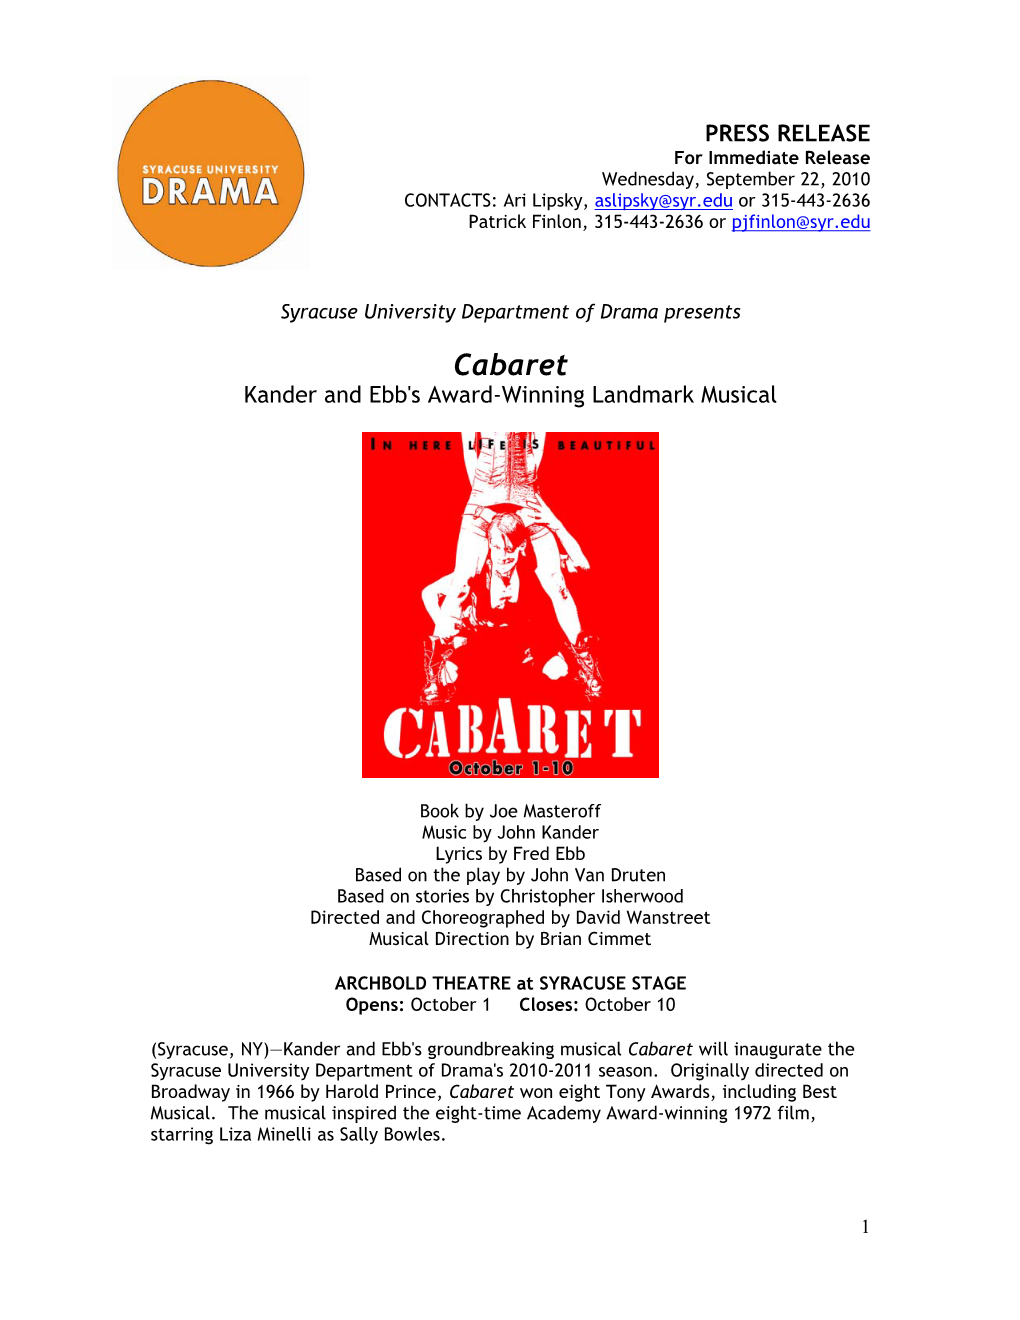 Cabaret Kander and Ebb's Award-Winning Landmark Musical